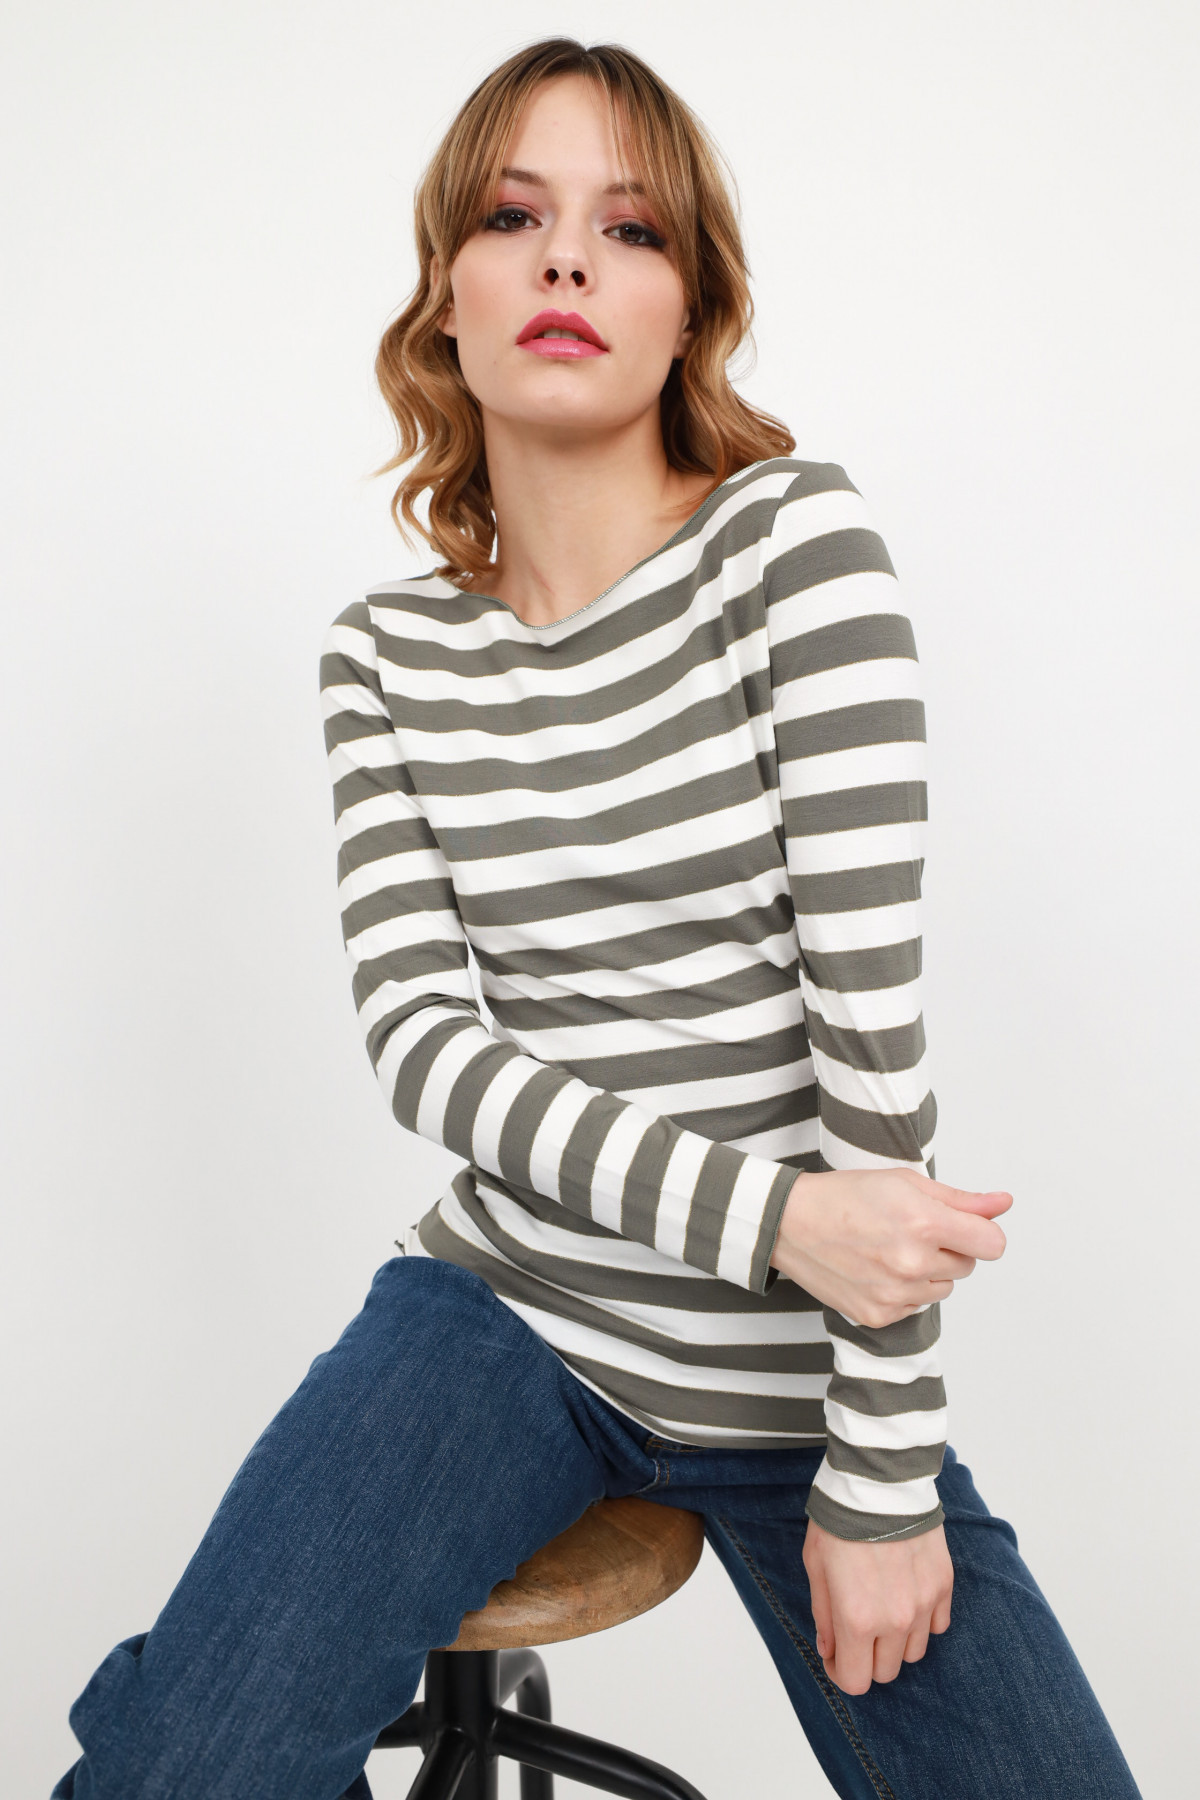 Striped boat shirt